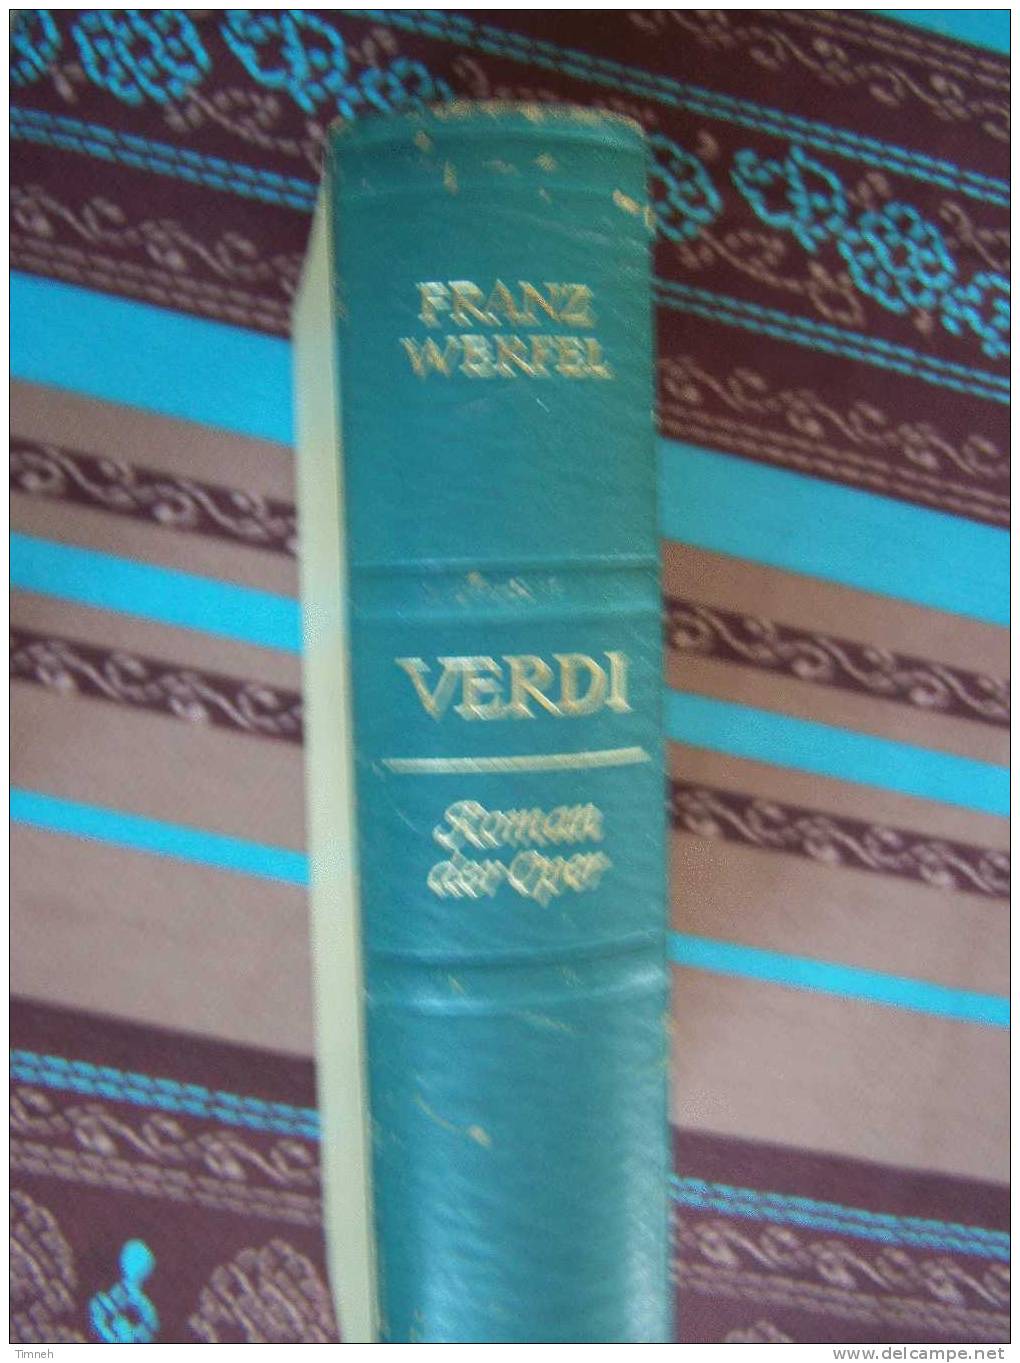 VERDI-Roman Der Oper-Franz Werfel-1955-Deutsche Buch Gemeinschaft- - Biographies & Mémoires